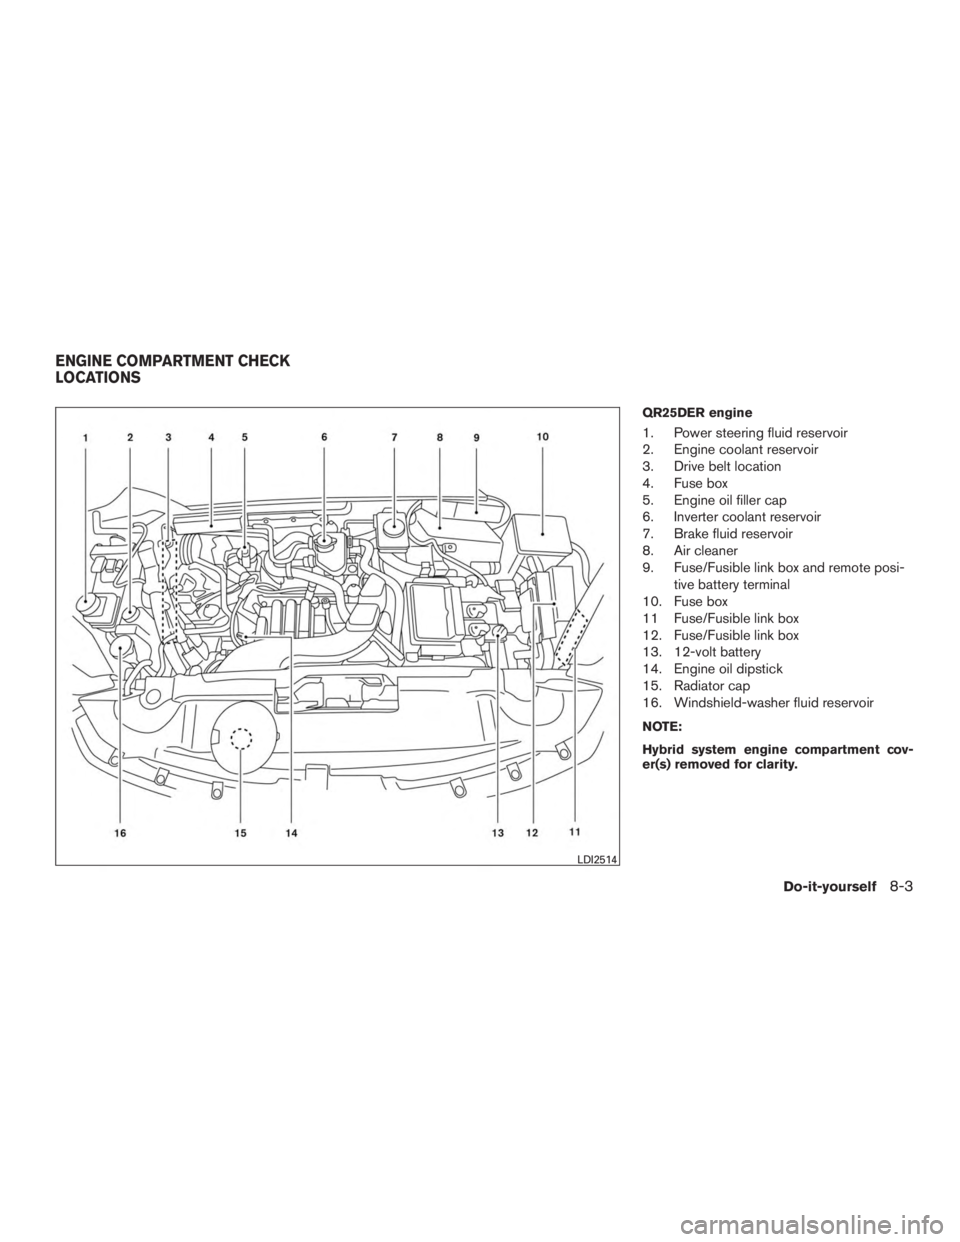 INFINITI QX60 HYBRID 2017  Owners Manual QR25DER engine
1. Power steering fluid reservoir
2. Engine coolant reservoir
3. Drive belt location
4. Fuse box
5. Engine oil filler cap
6. Inverter coolant reservoir
7. Brake fluid reservoir
8. Air c